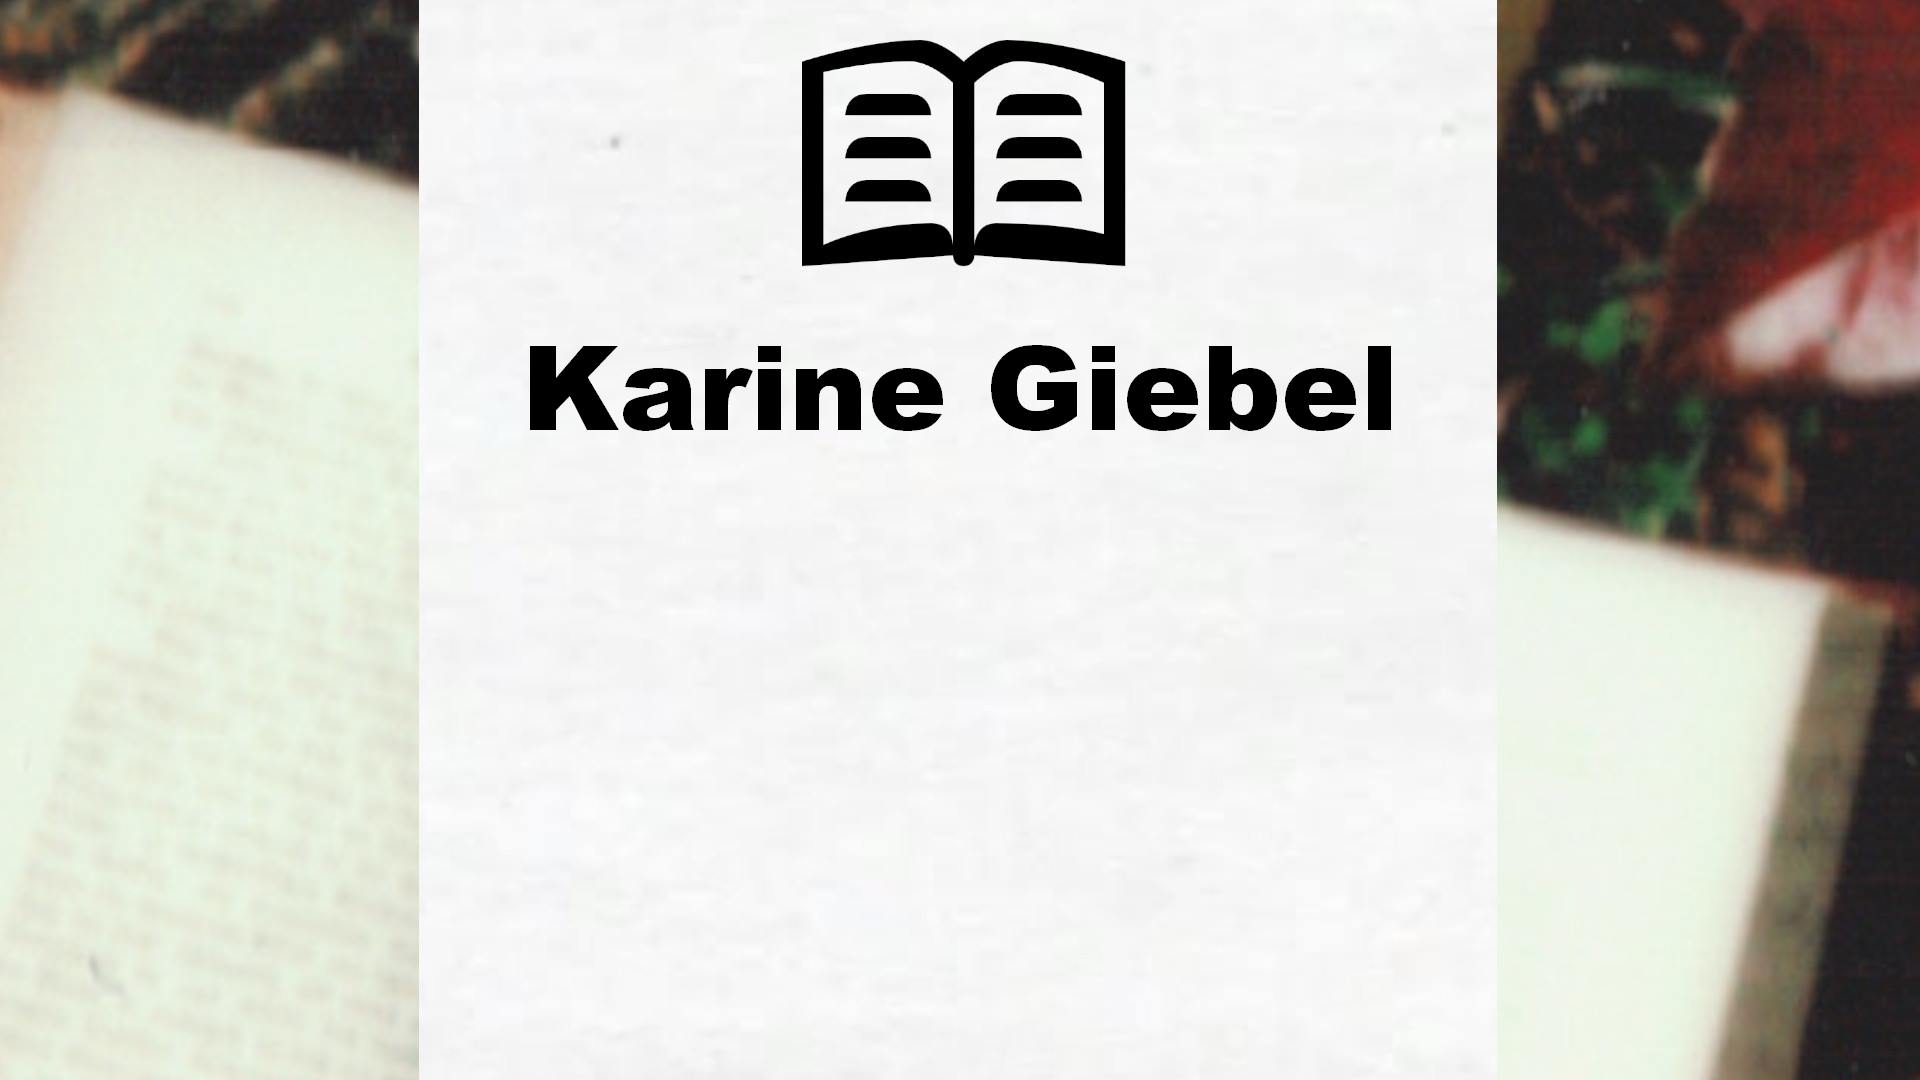 Livres de Karine Giebel